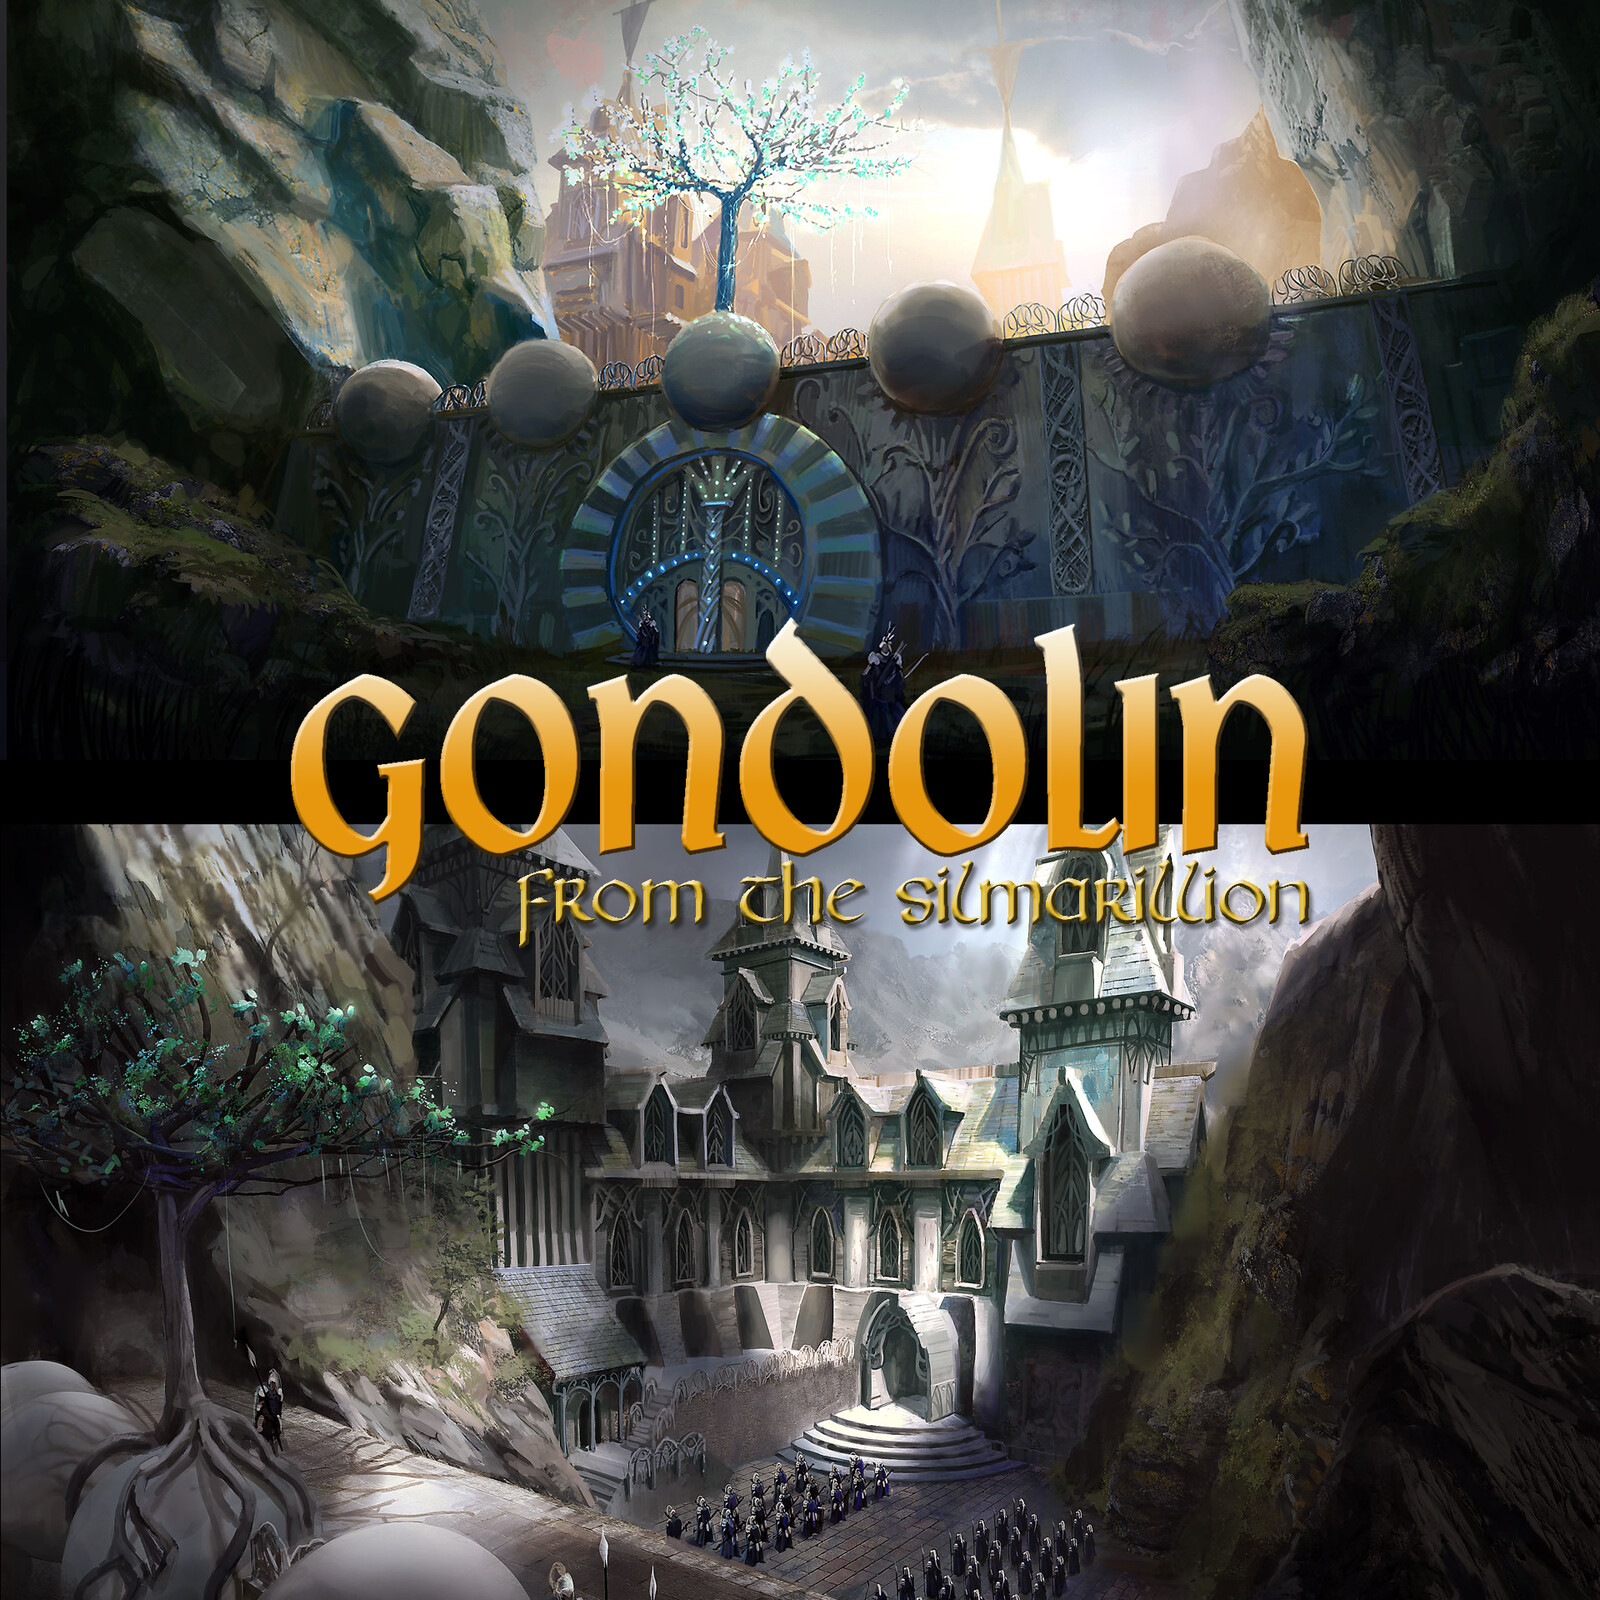 Gondolin Silver gate - From the Silmarillion